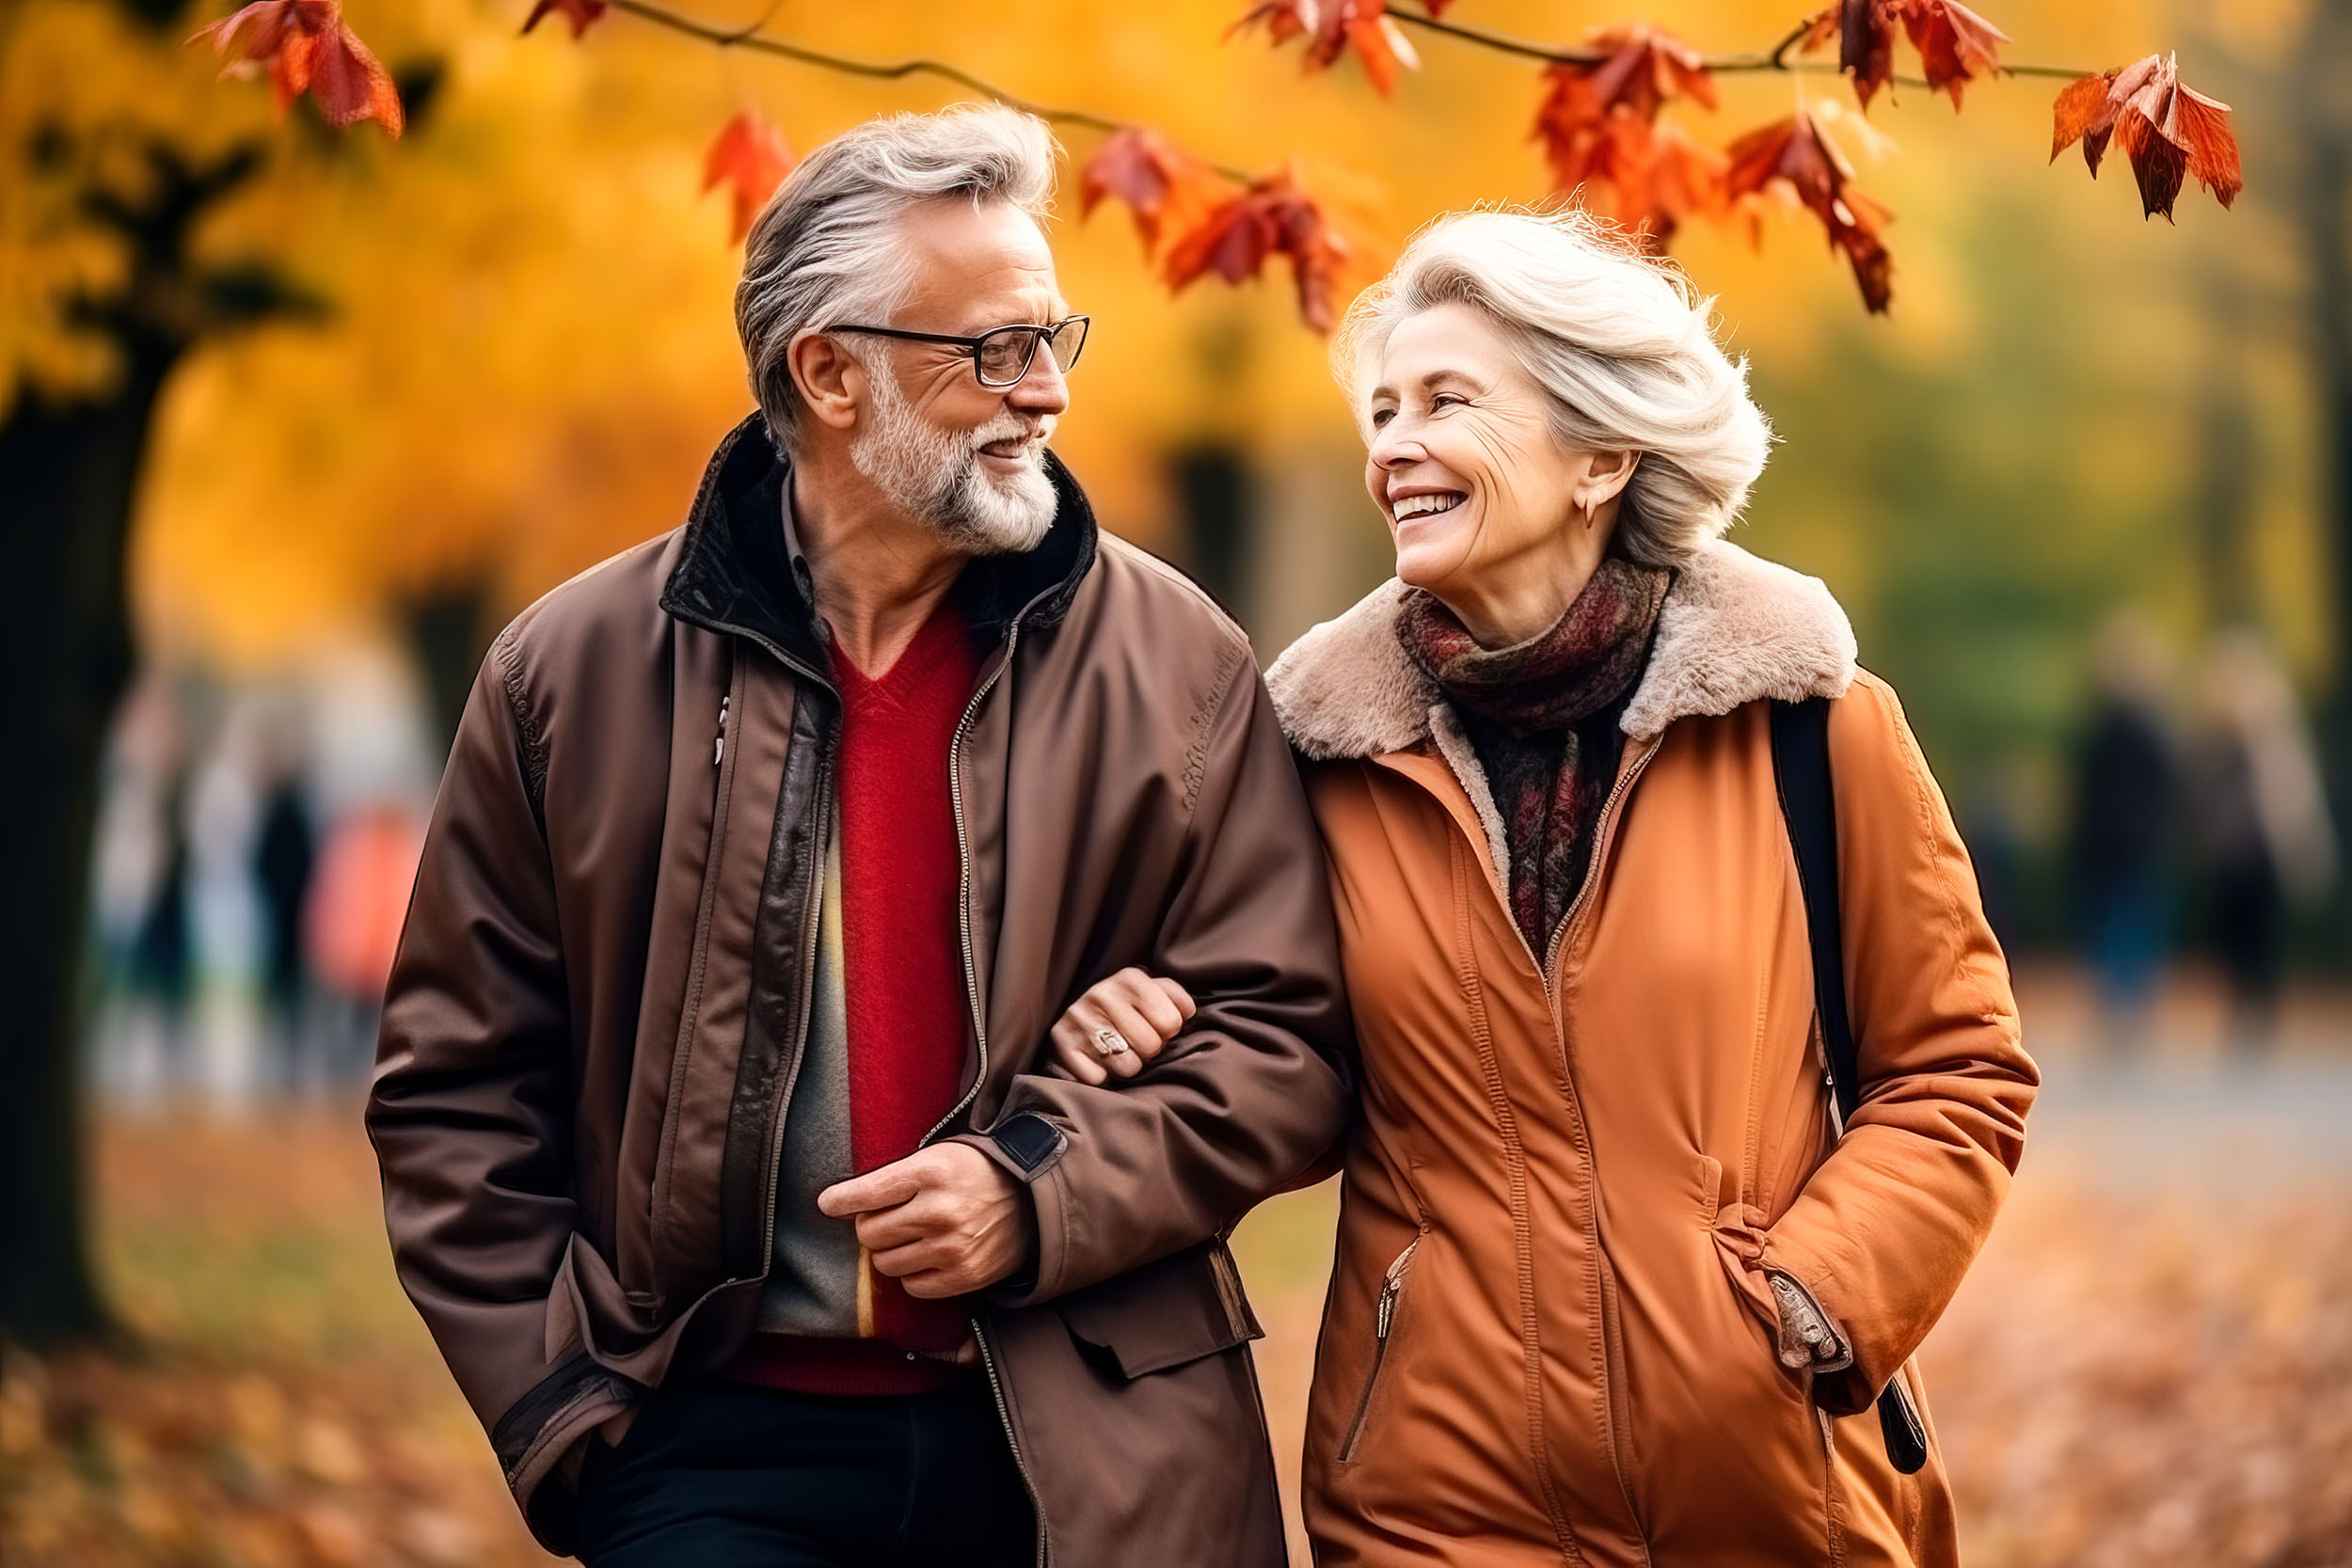 Beautiful elderly couple walking in an autumn park